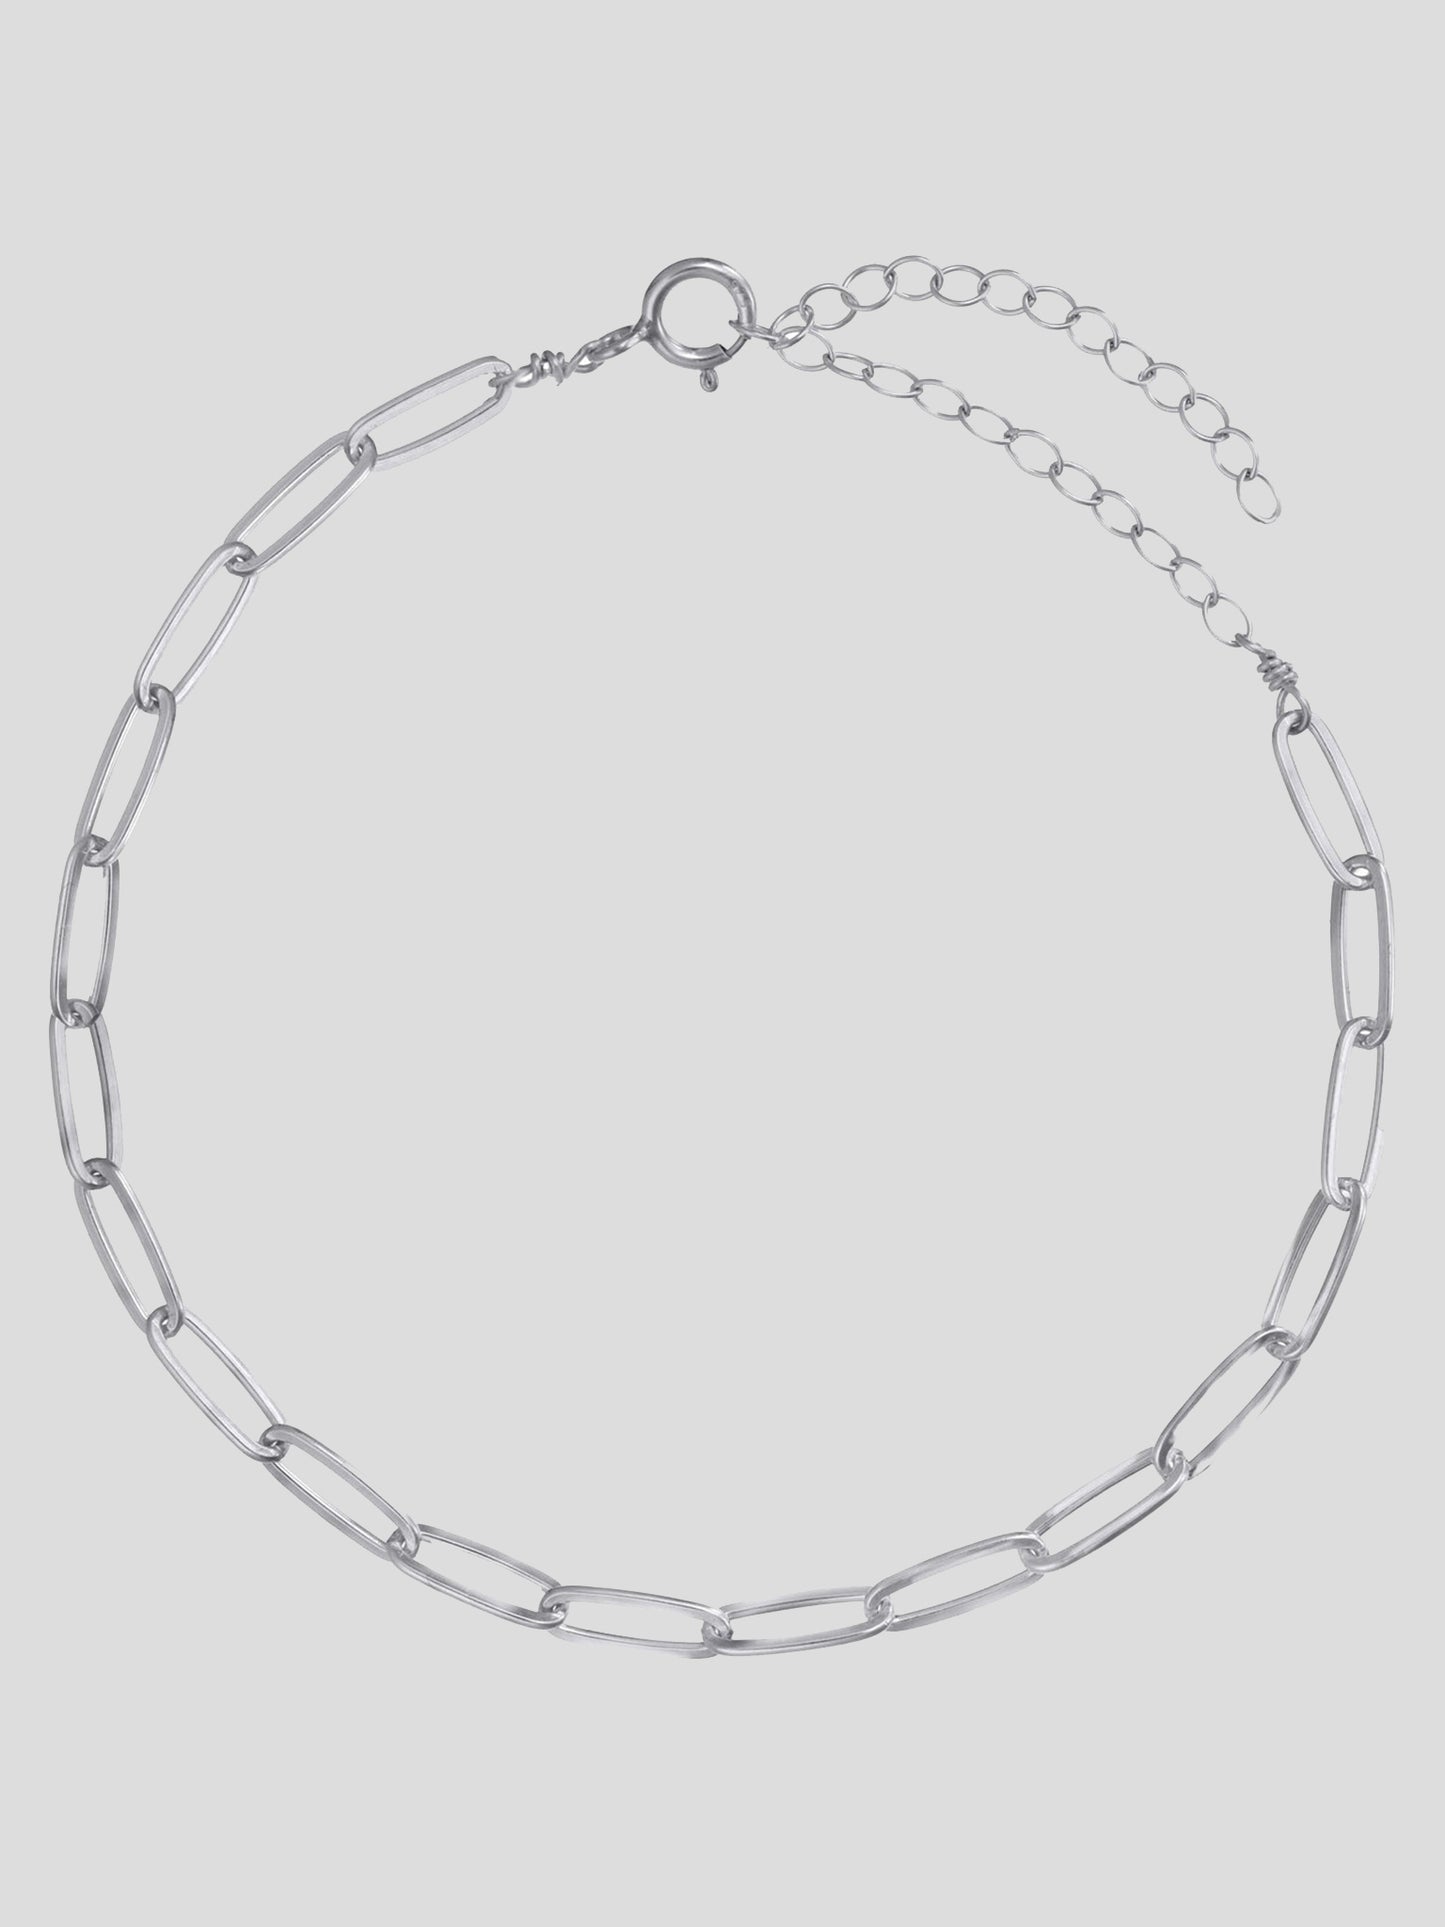 Kozakh Jewelry Norita Bracelet